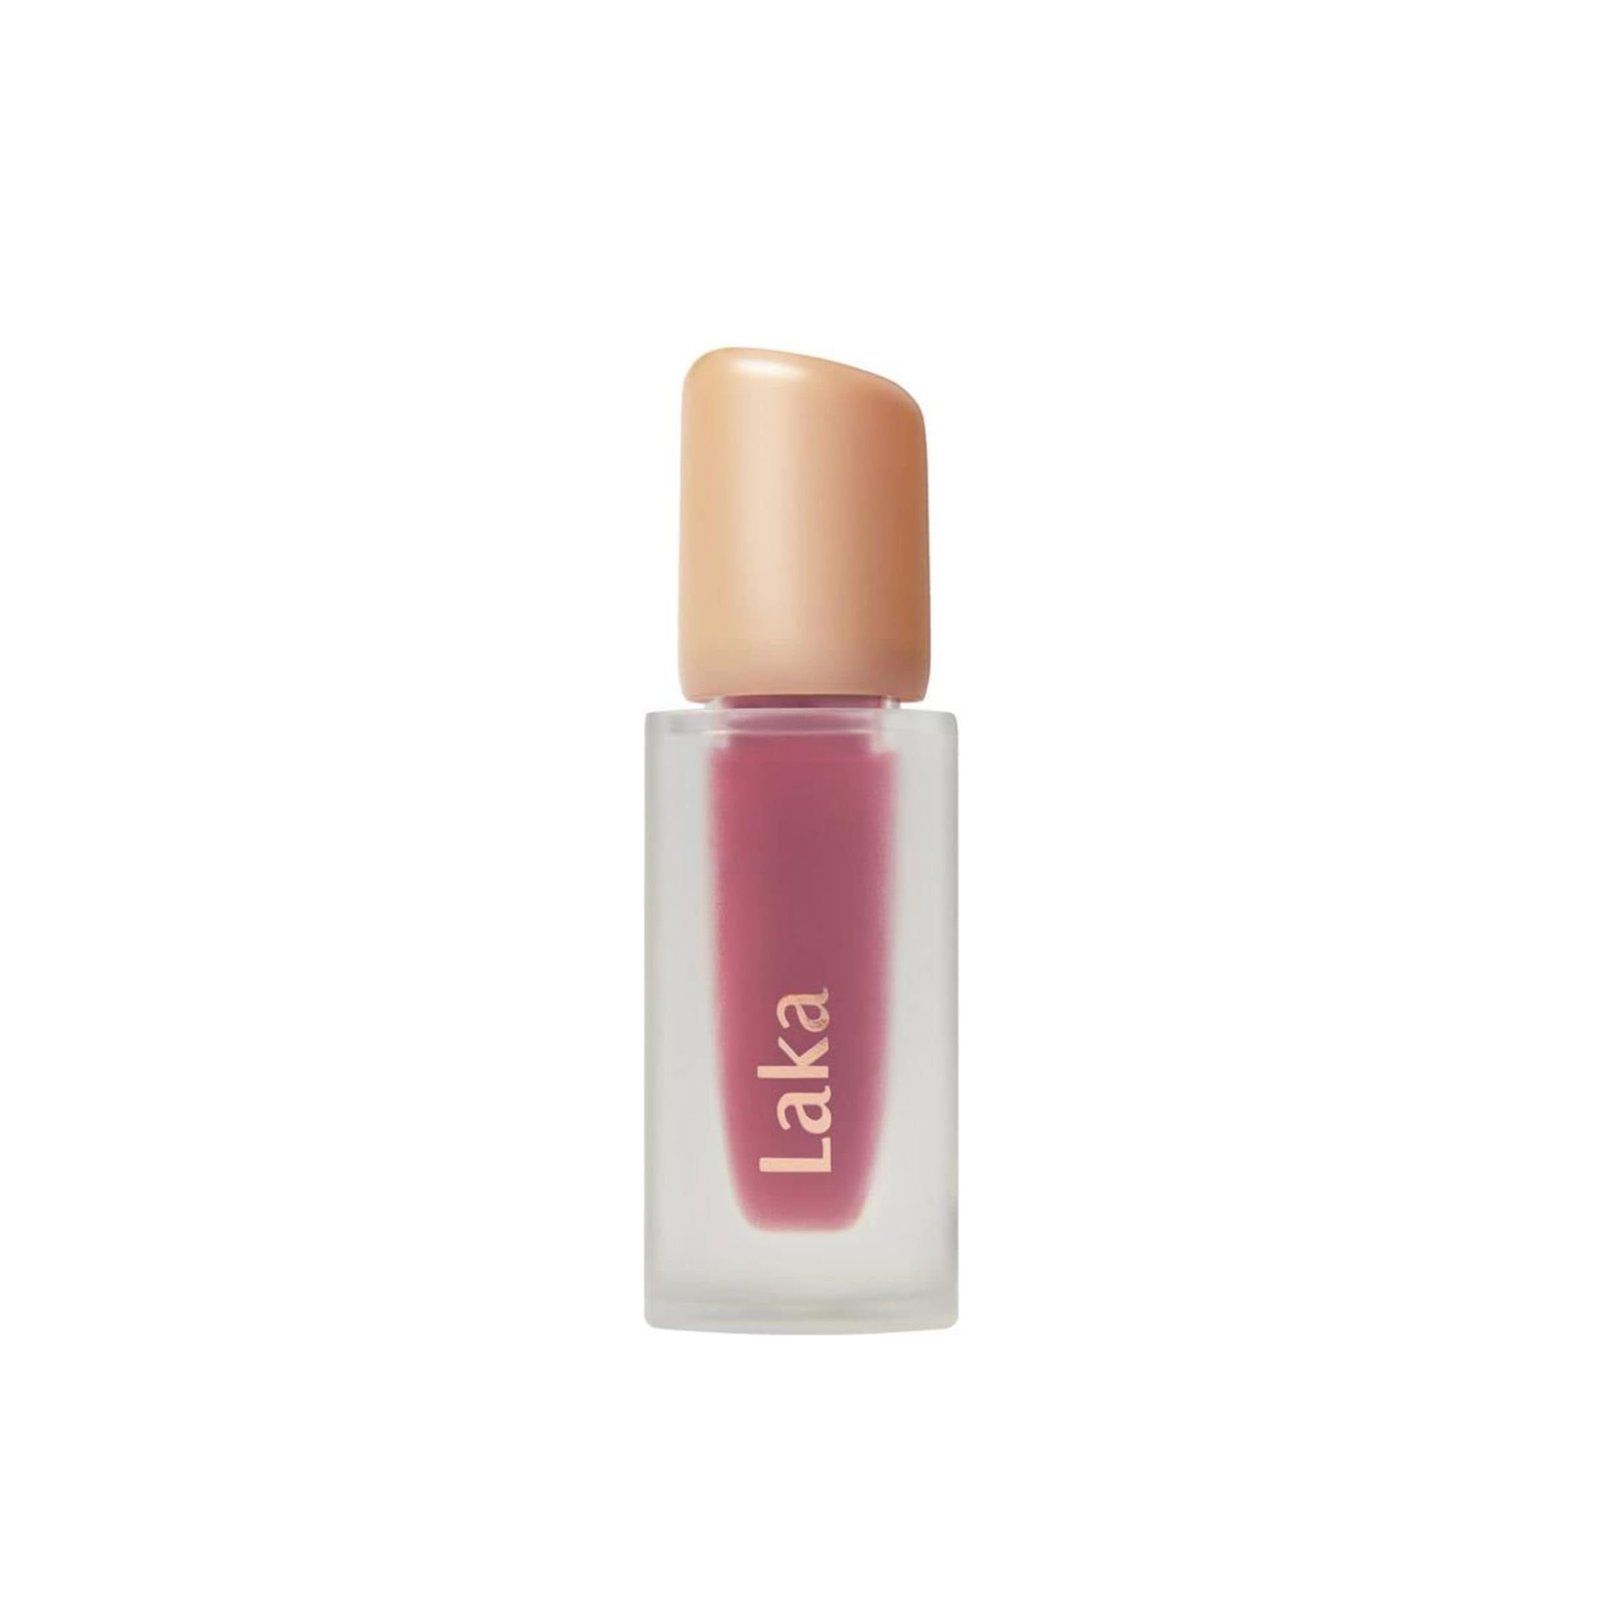 Laka Fruity Glam Lip Tint 113 Pleasure 4.5g (0.15 oz)